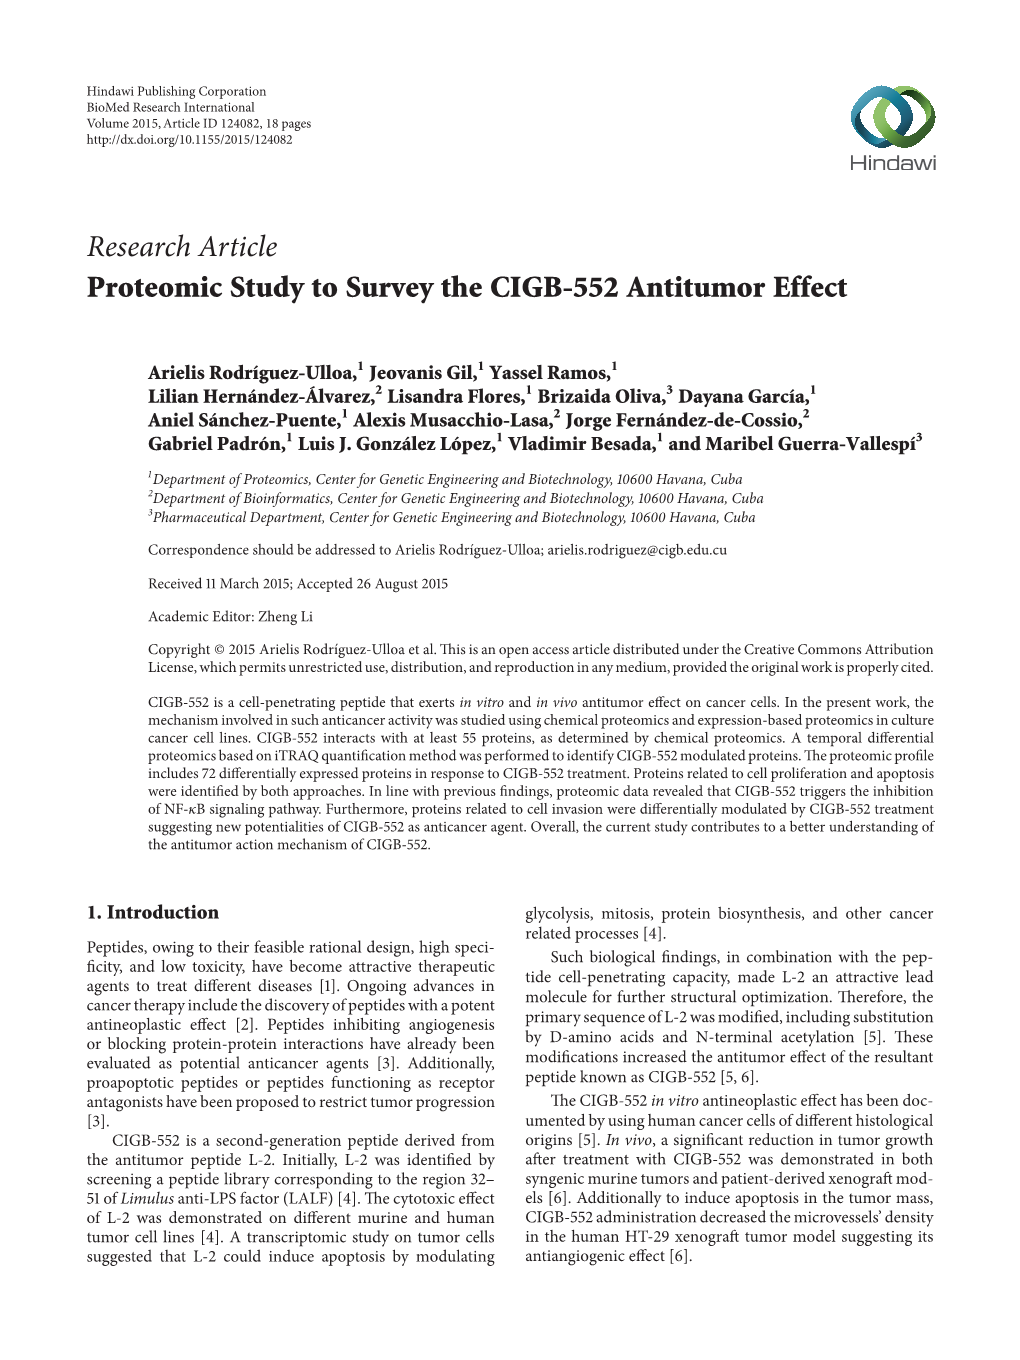 Proteomic Study to Survey the CIGB-552 Antitumor Effect